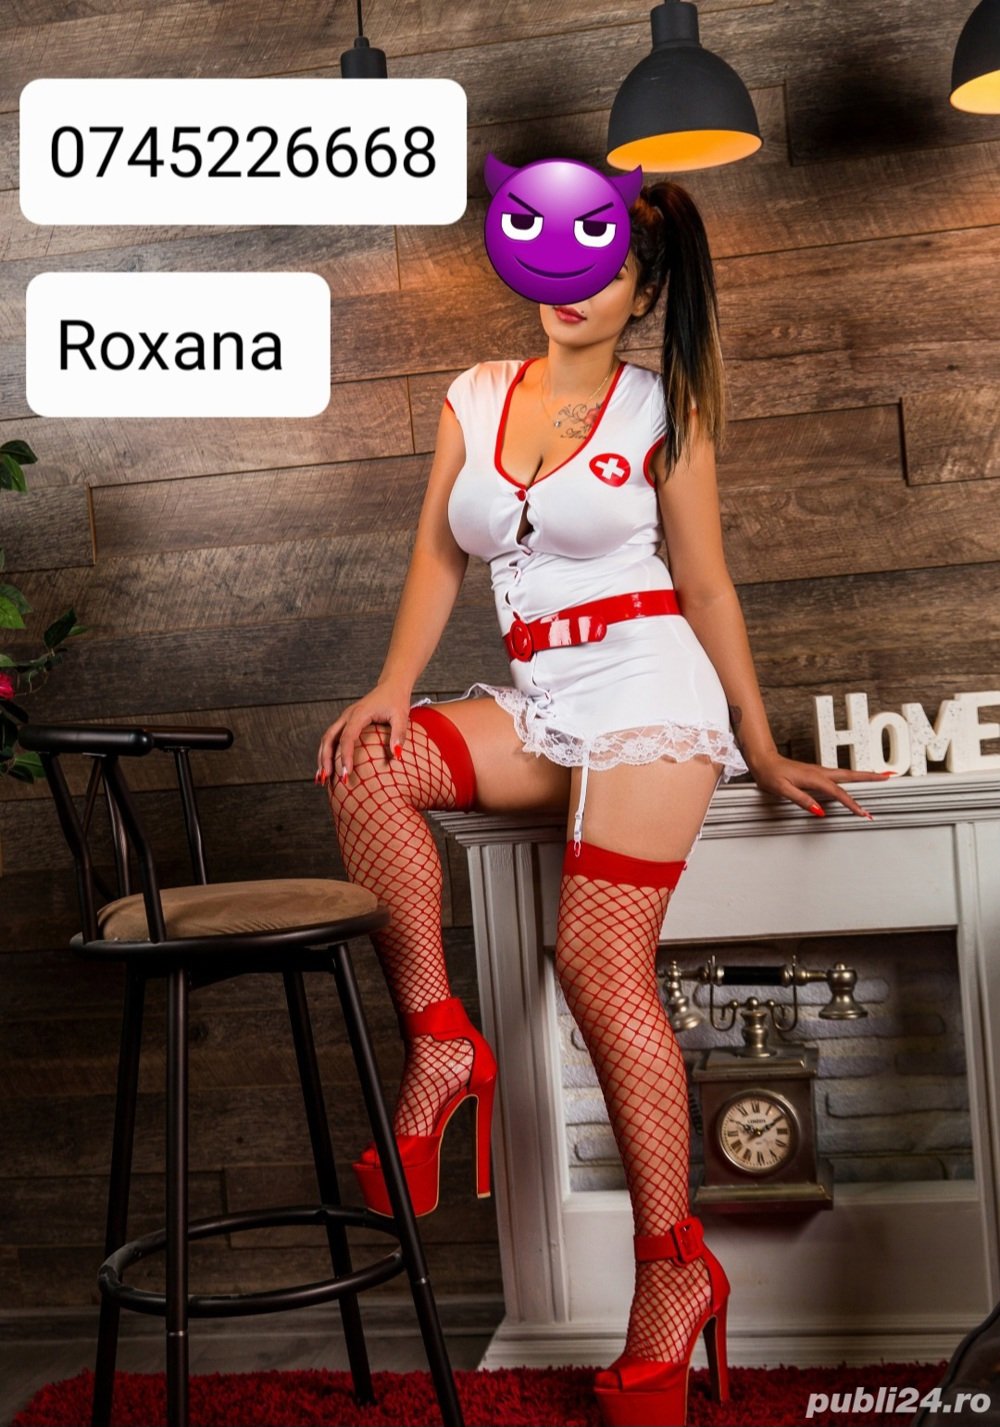 !!!Am revenit Roxana pircing zona intima!!! 100%reala  - imagine 4